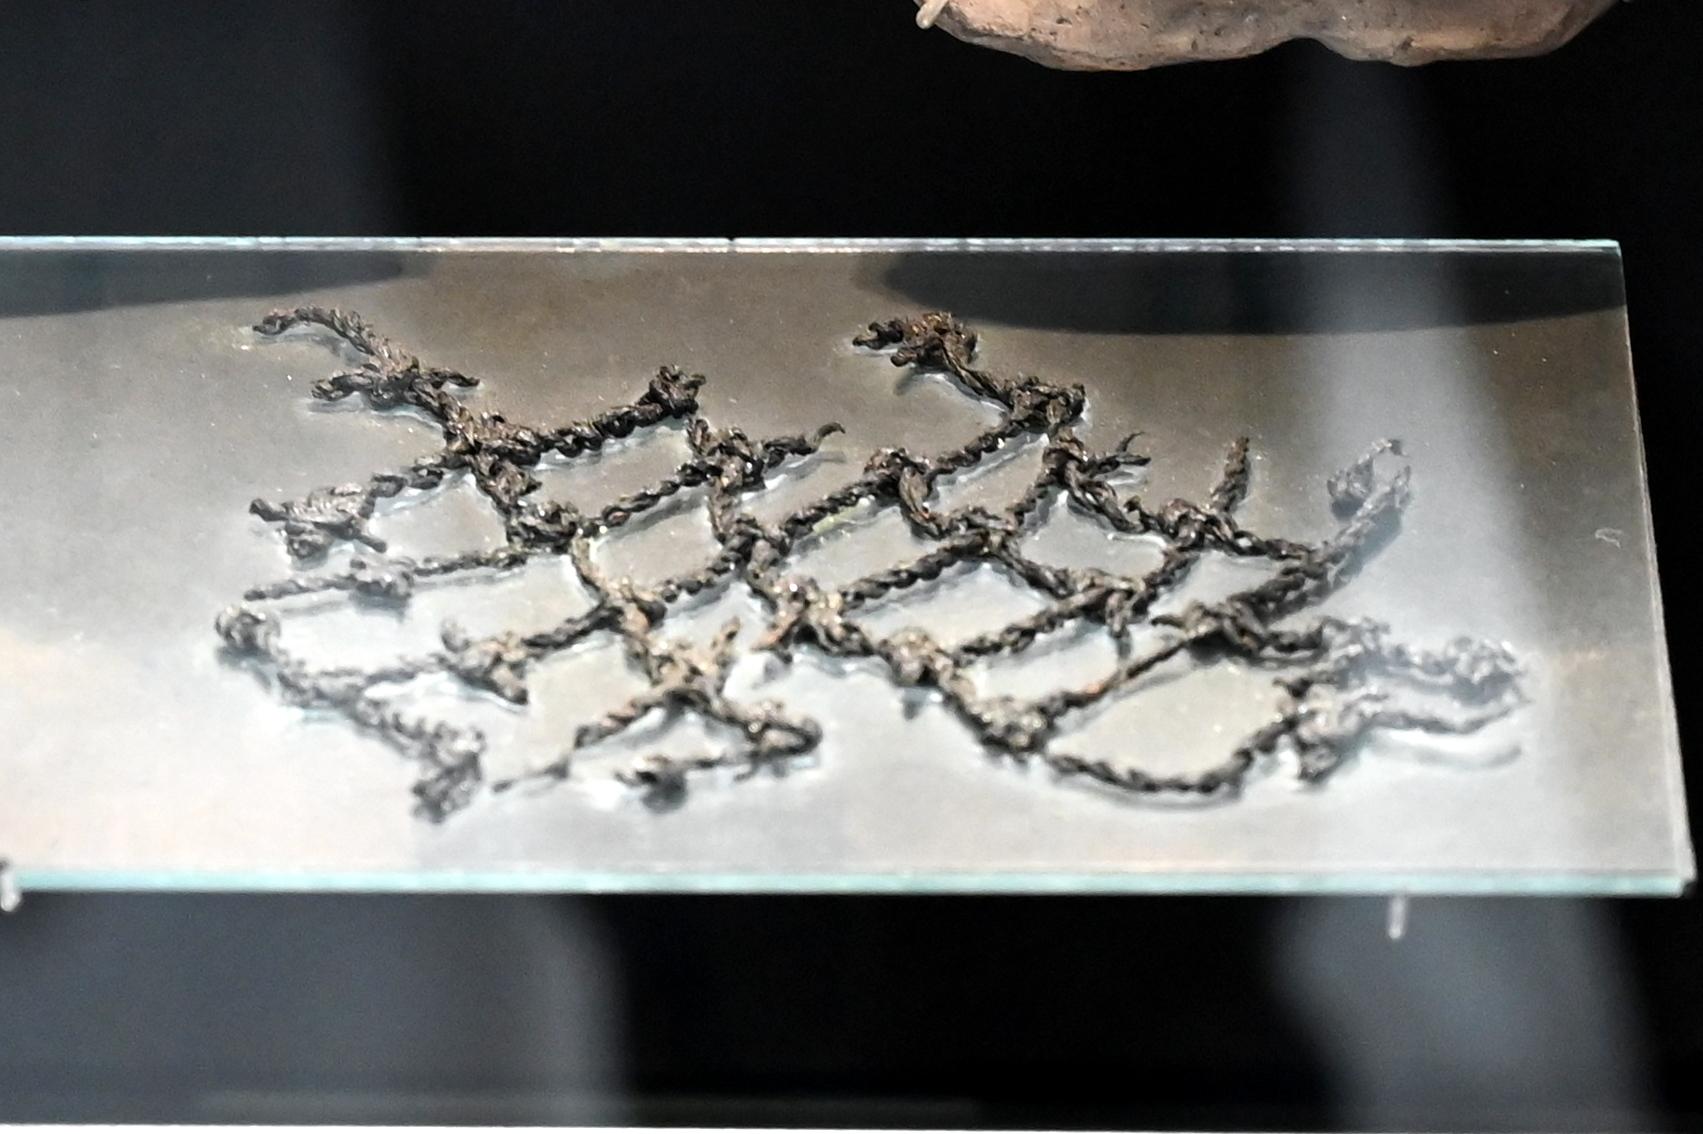 Netz, Neolithikum (Jungsteinzeit), 5500 - 1700 v. Chr., 4000 v. Chr., Bild 1/2